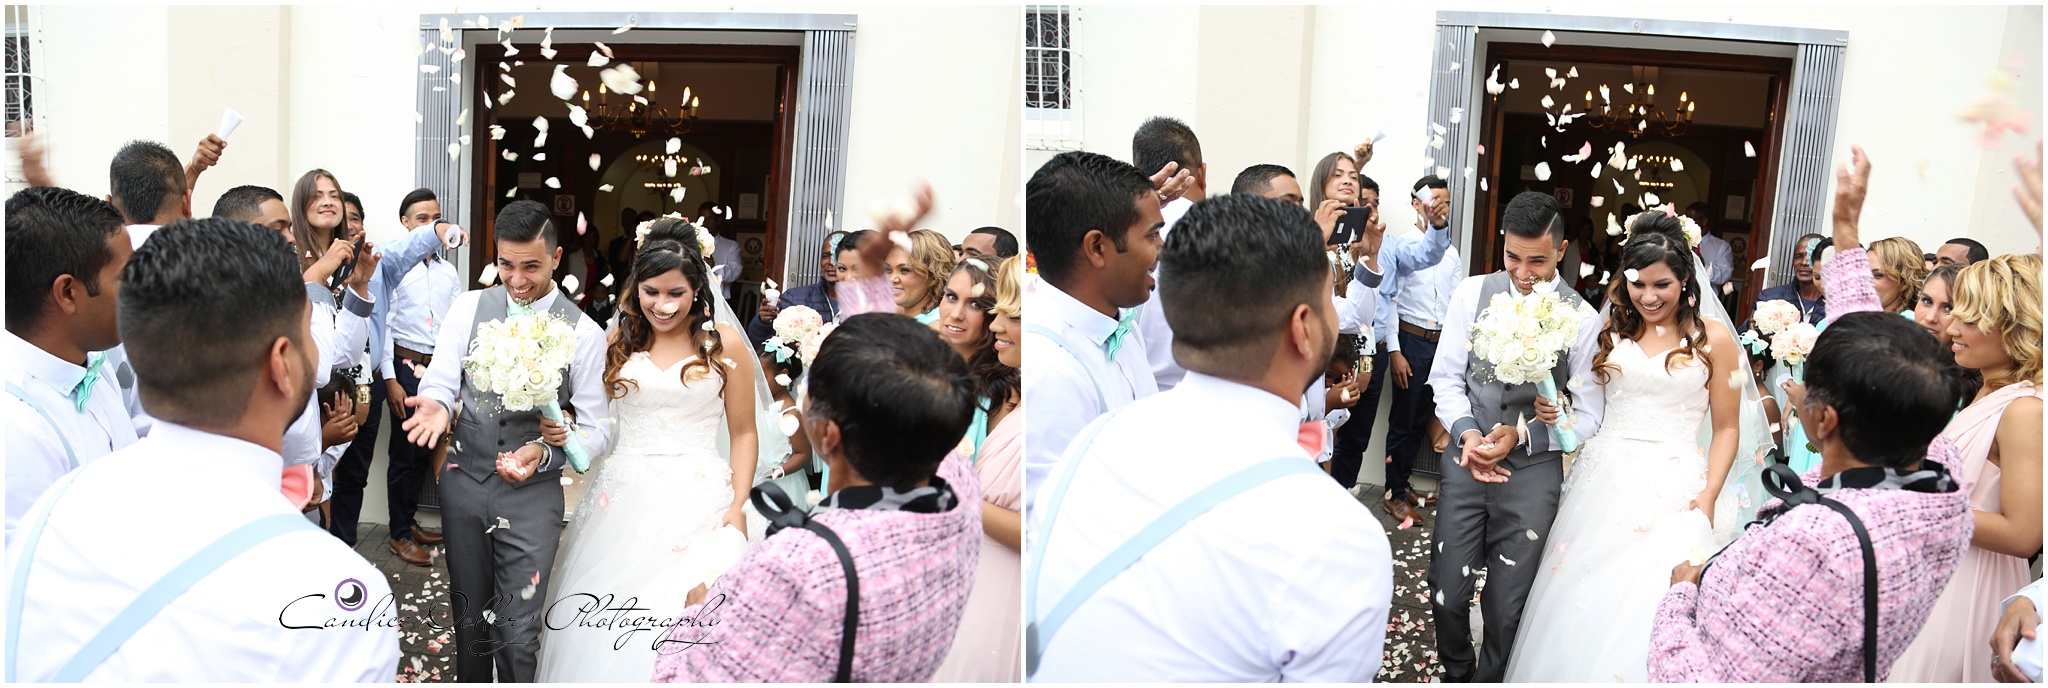 Paula & Jaycee's Wedding - Cypress Dale - Candice Dollery Photography_3054